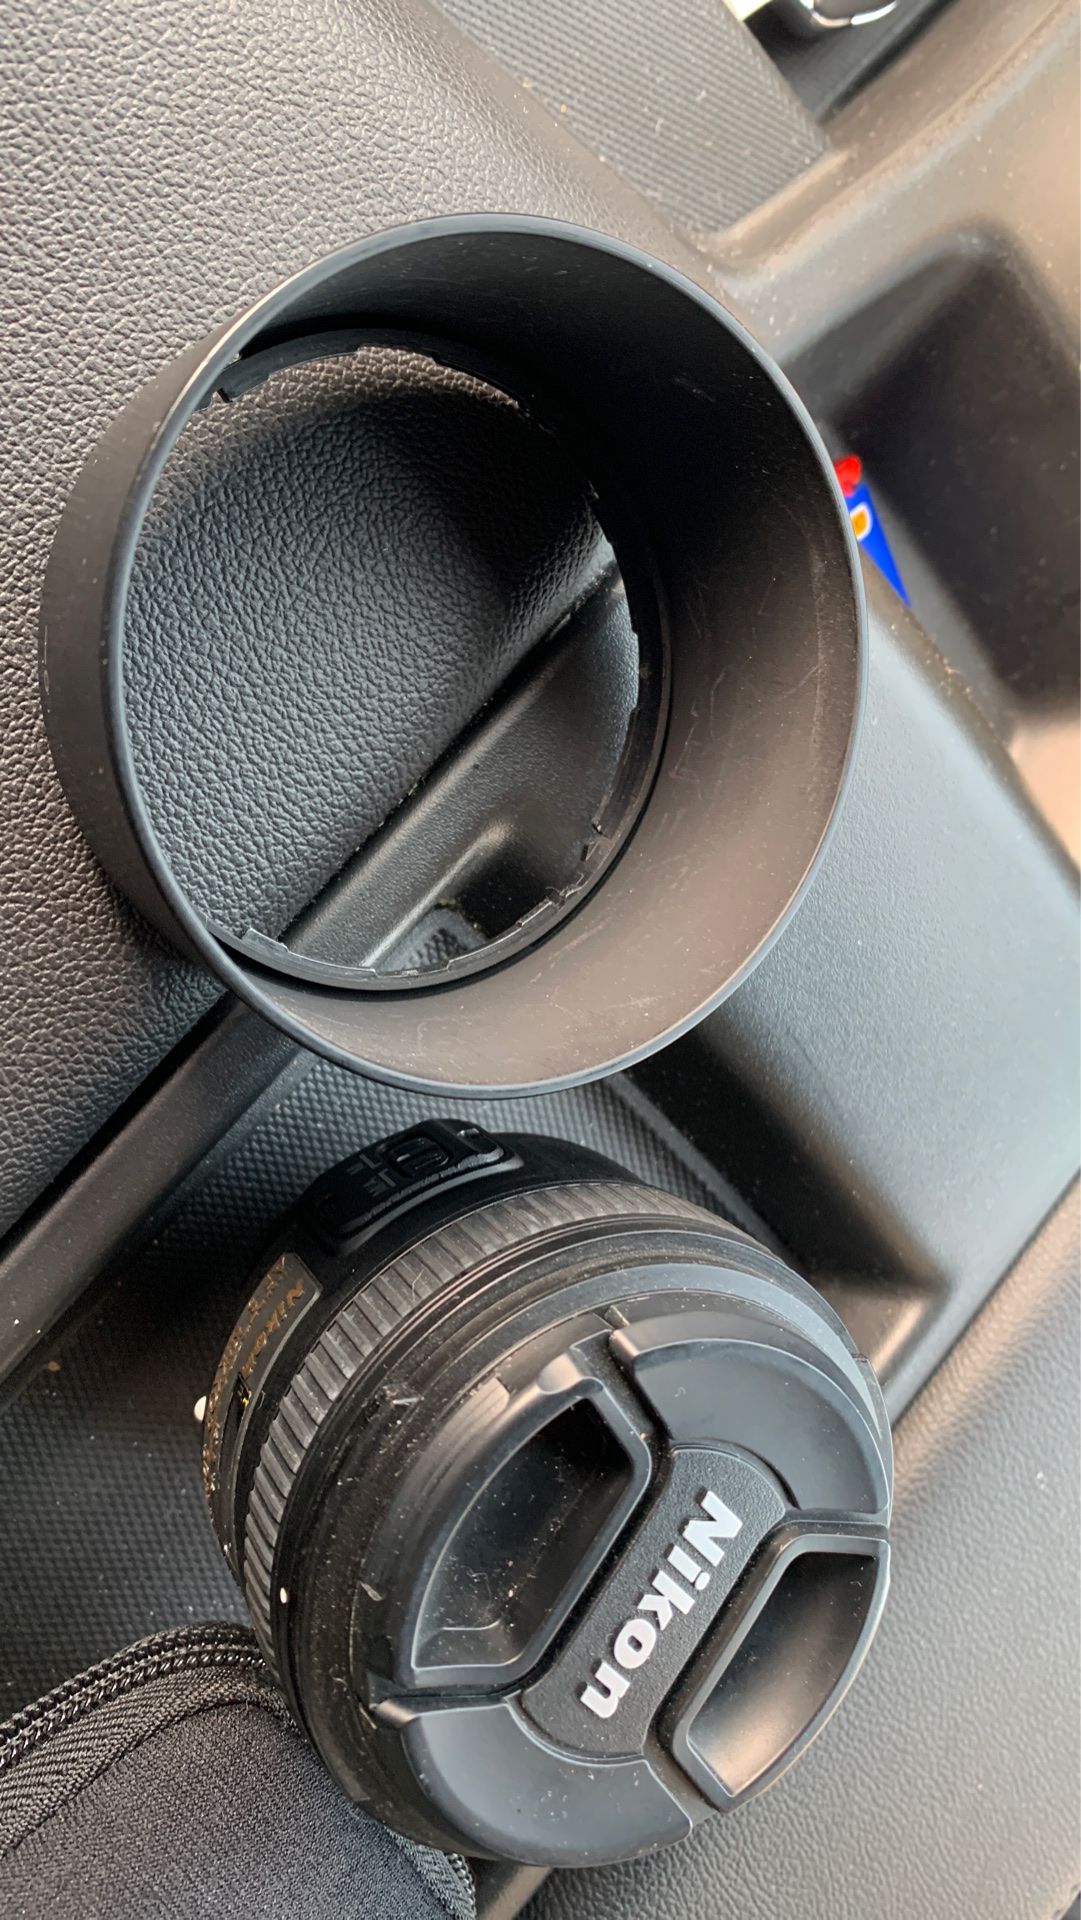 Nikon 50mm 1:1.8G Lens and lens hood